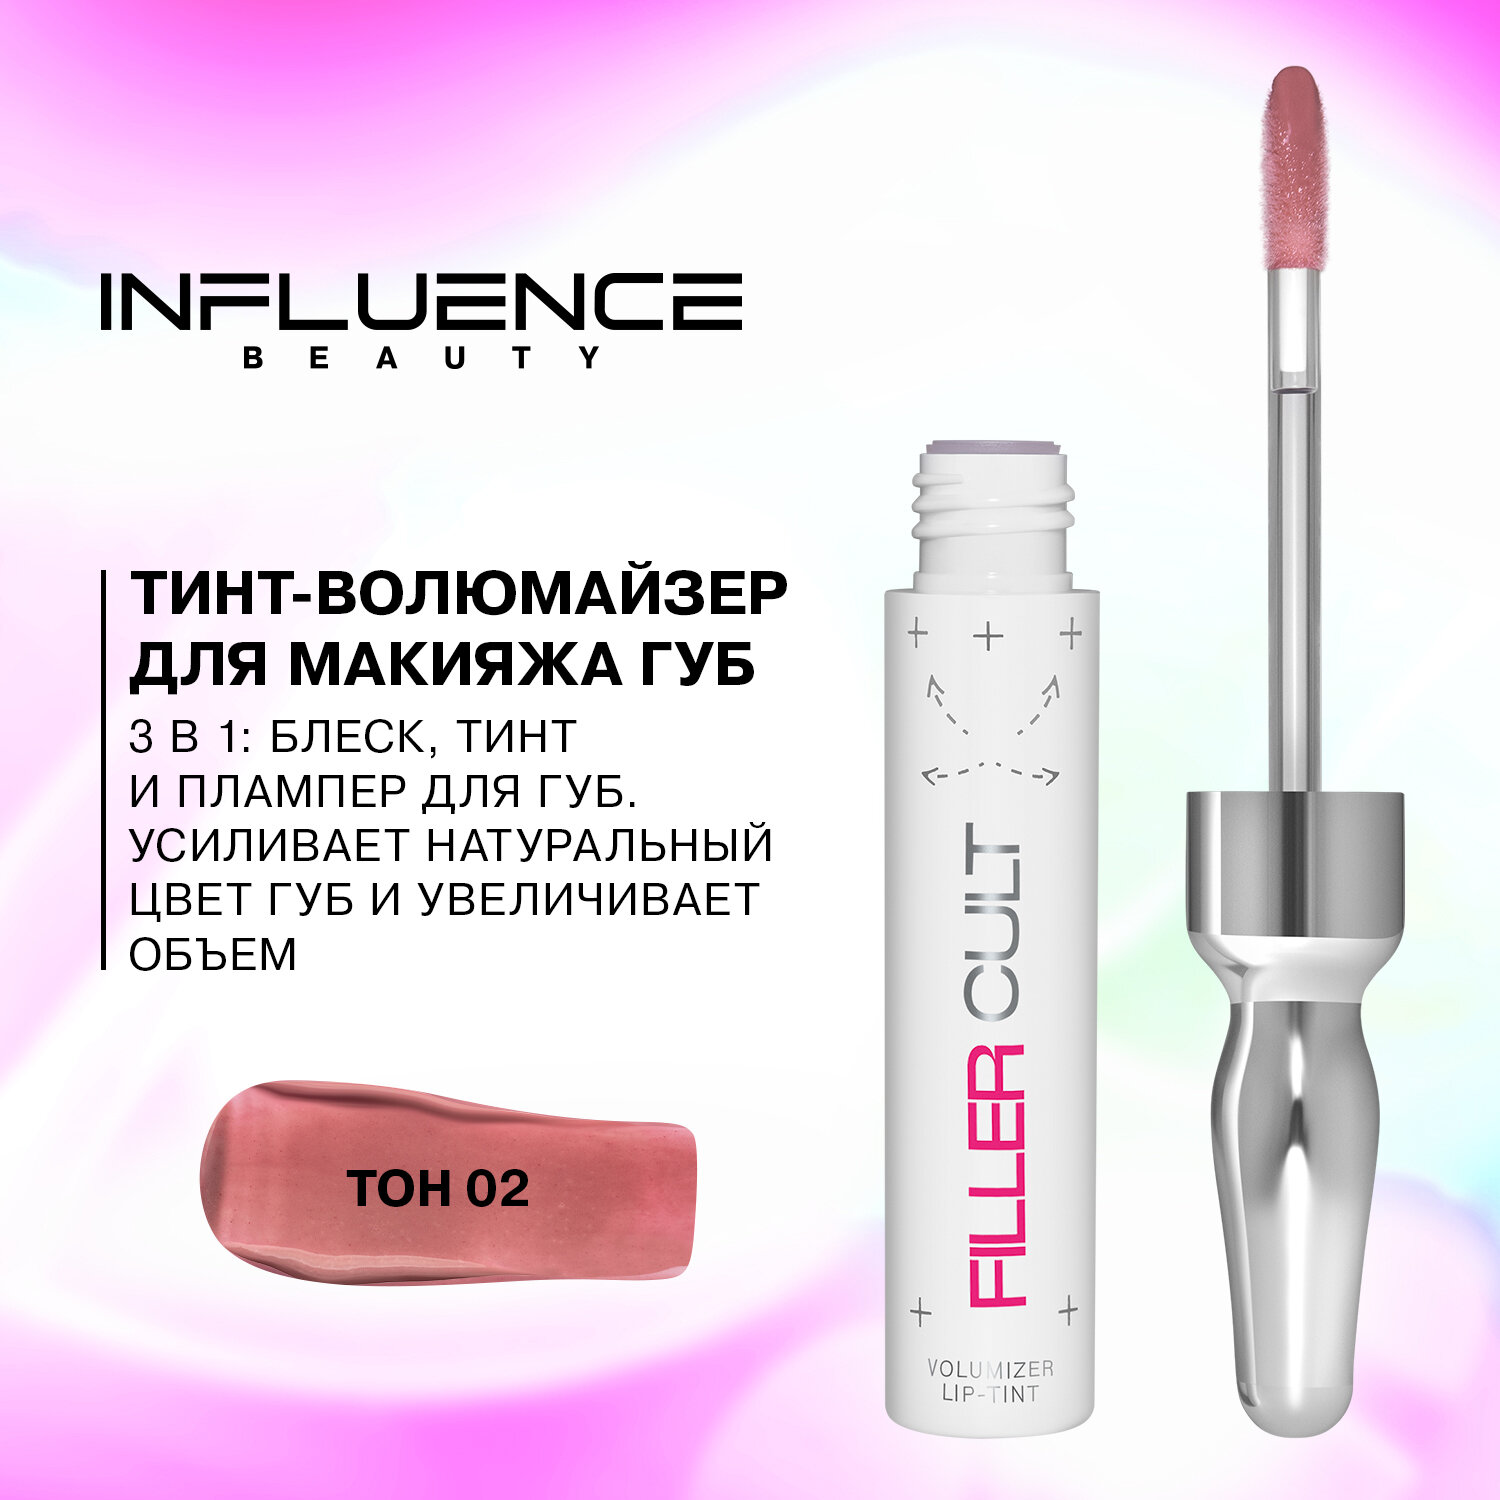 Influence Beauty Тинт-волюмайзер для губ/ Volumizer Lip-Tint "Filler Cult" тон/shade 02